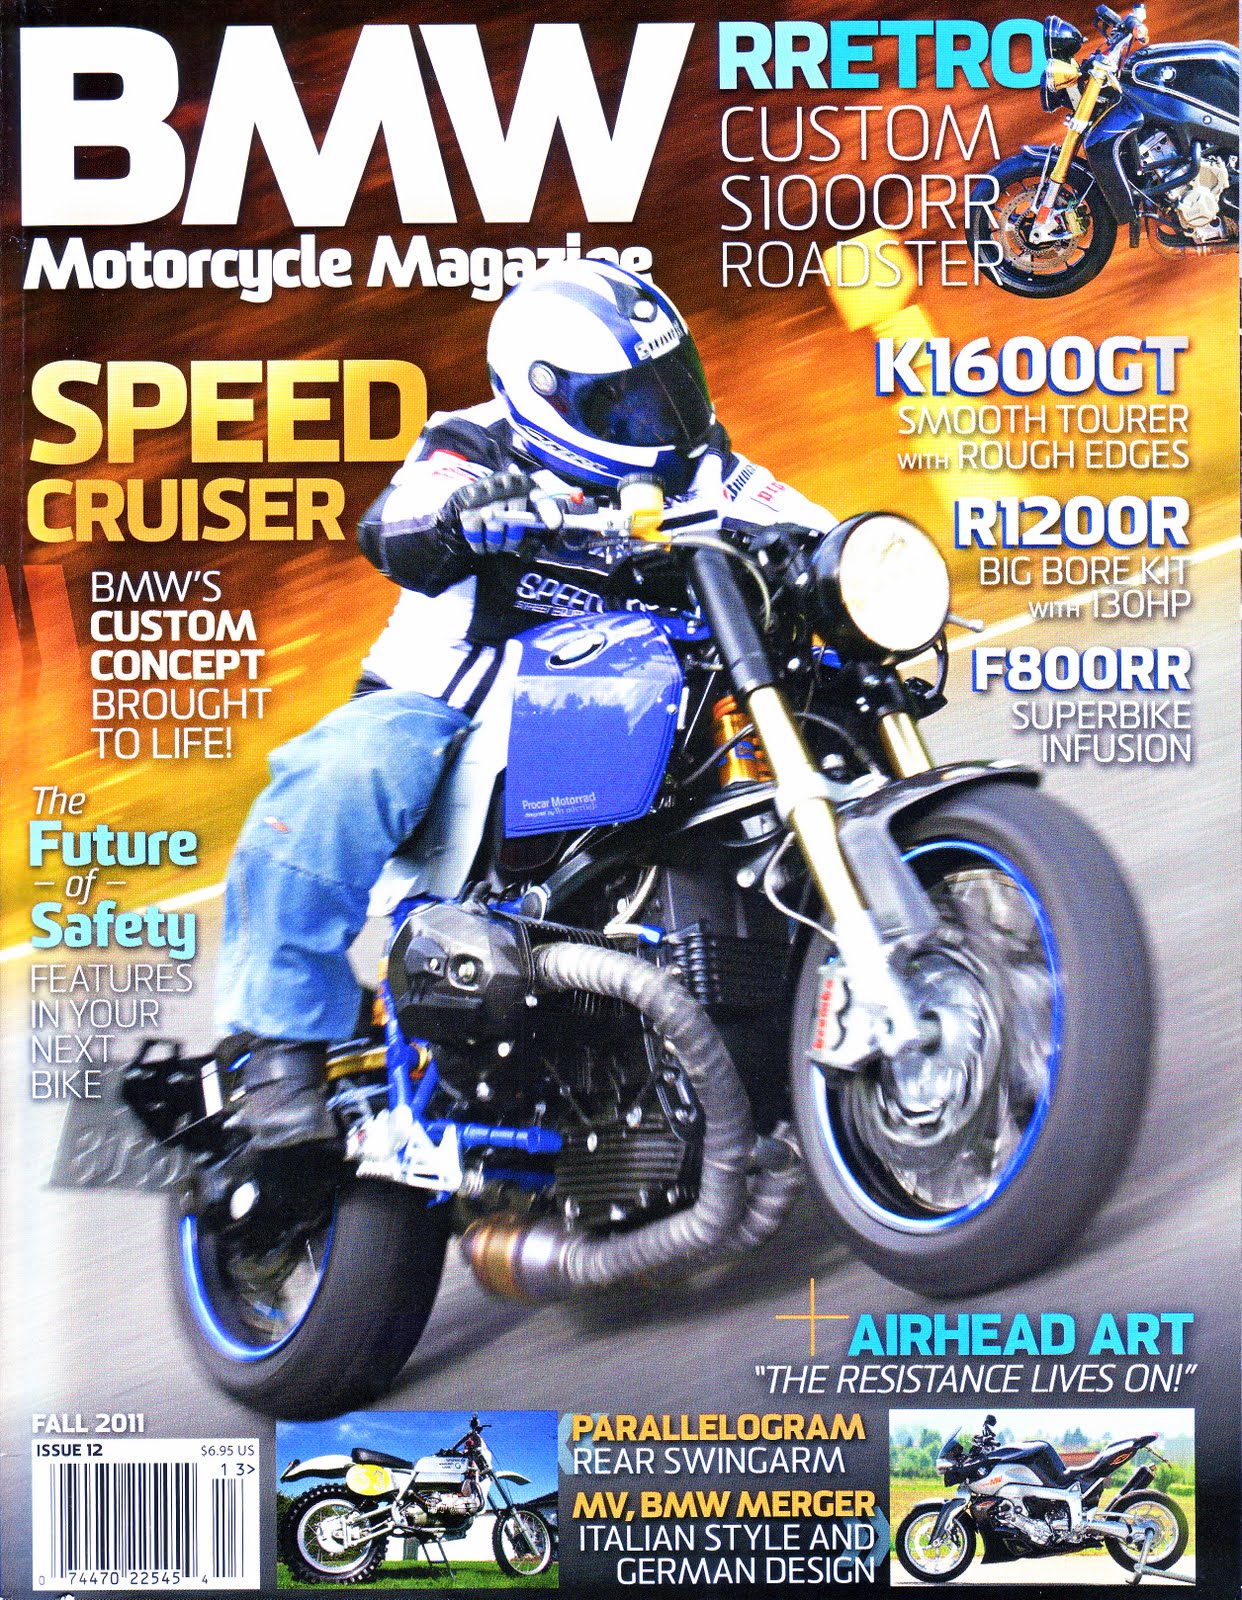 Motonation: BMW Motorcycle Magazine Vemar Jiano EVO TC Feature Fall 2011 Issue